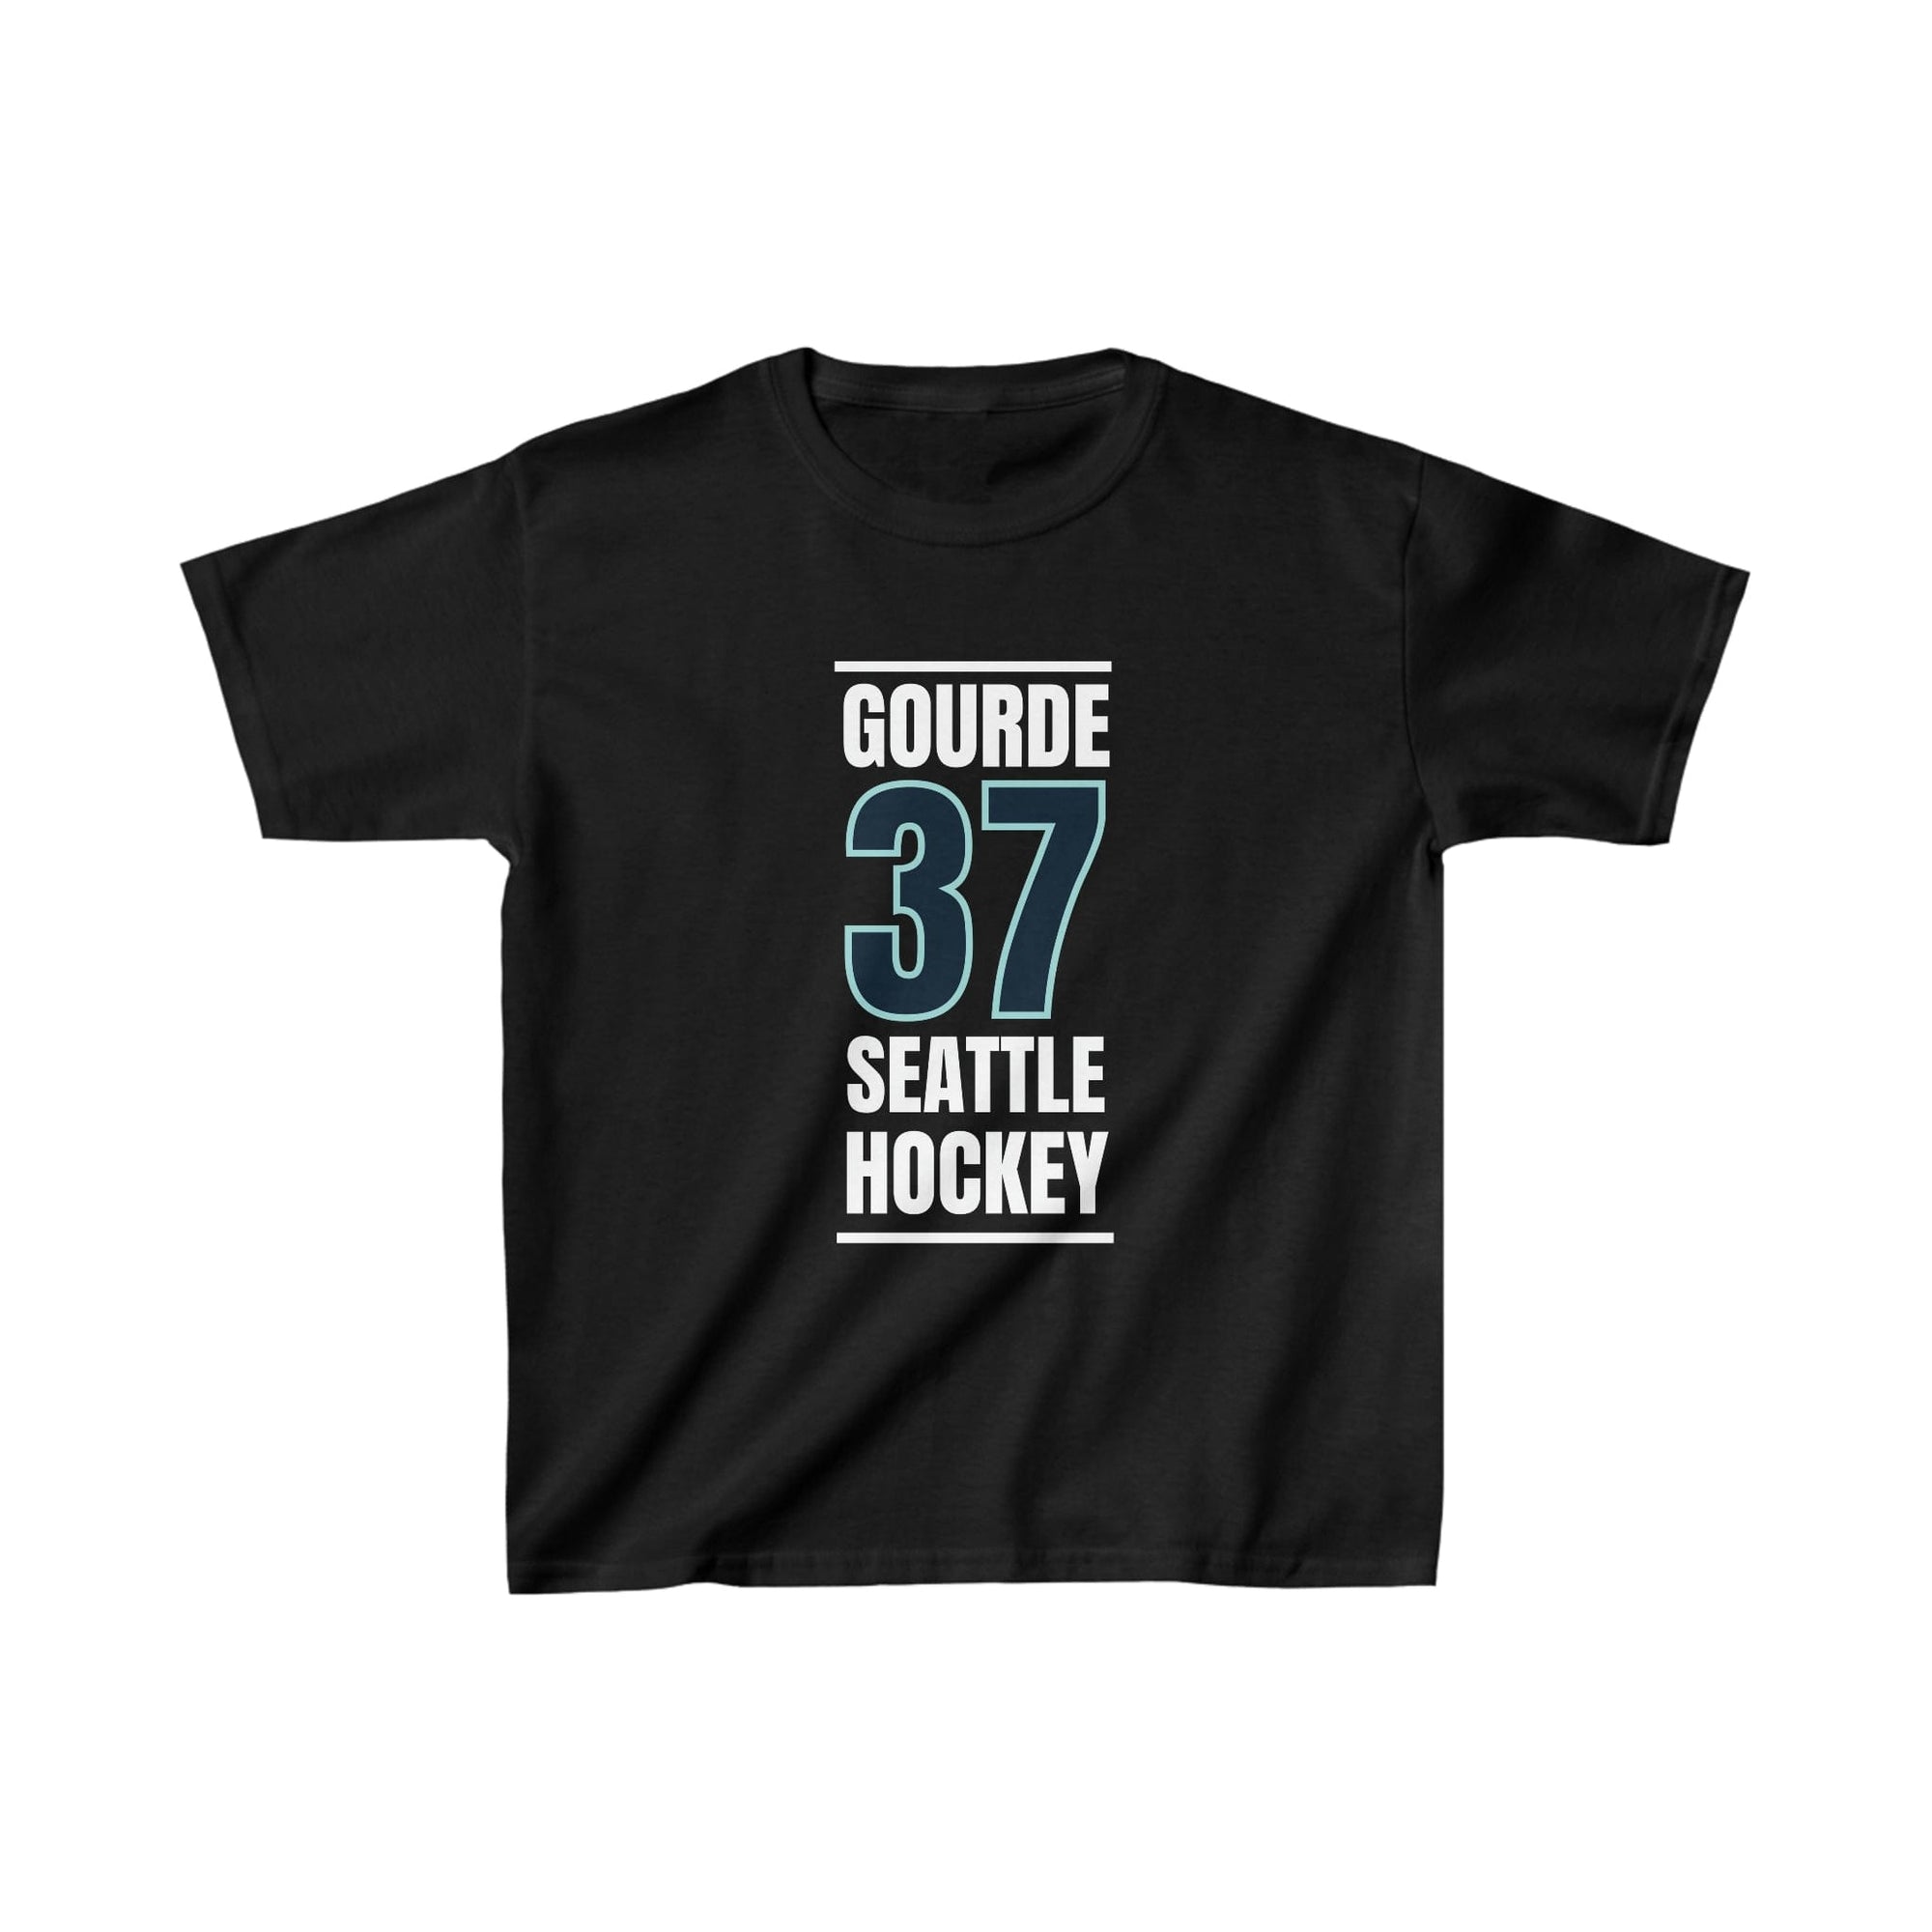 Kids clothes Gourde 37 Seattle Hockey Black Vertical Design Kids Tee